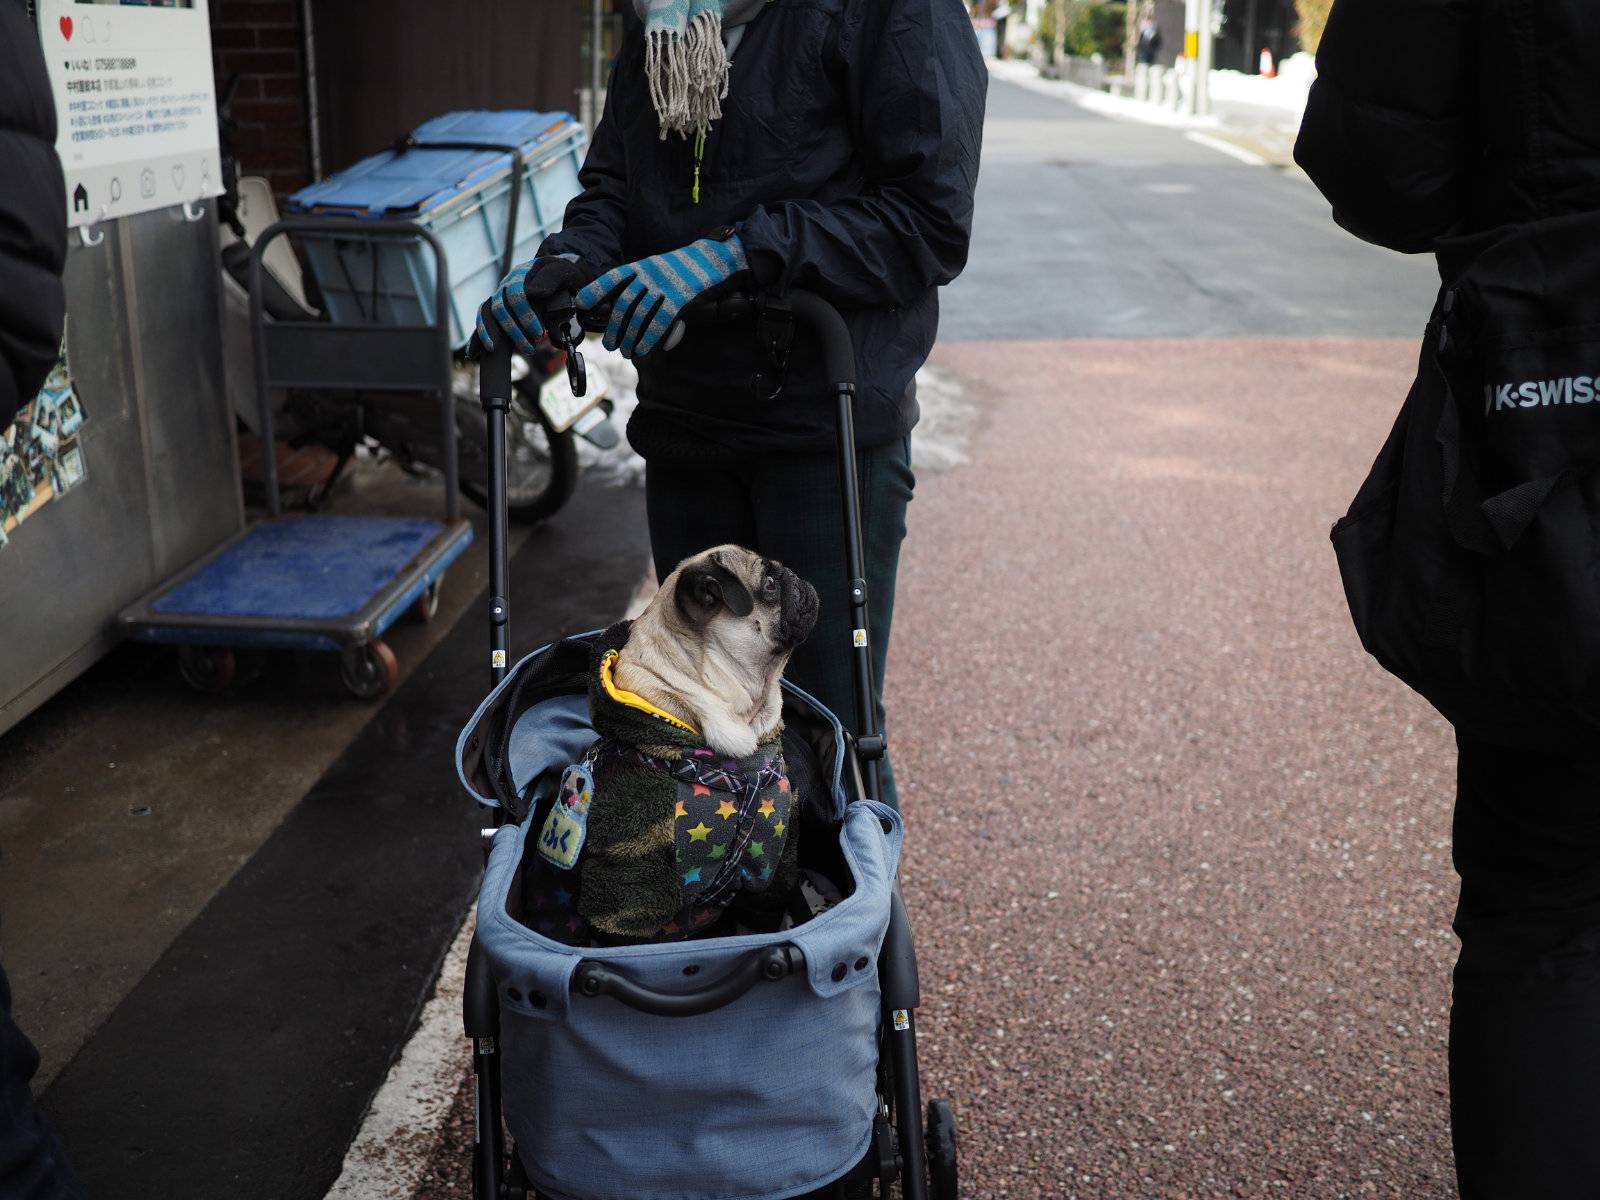 A pug in a stroller